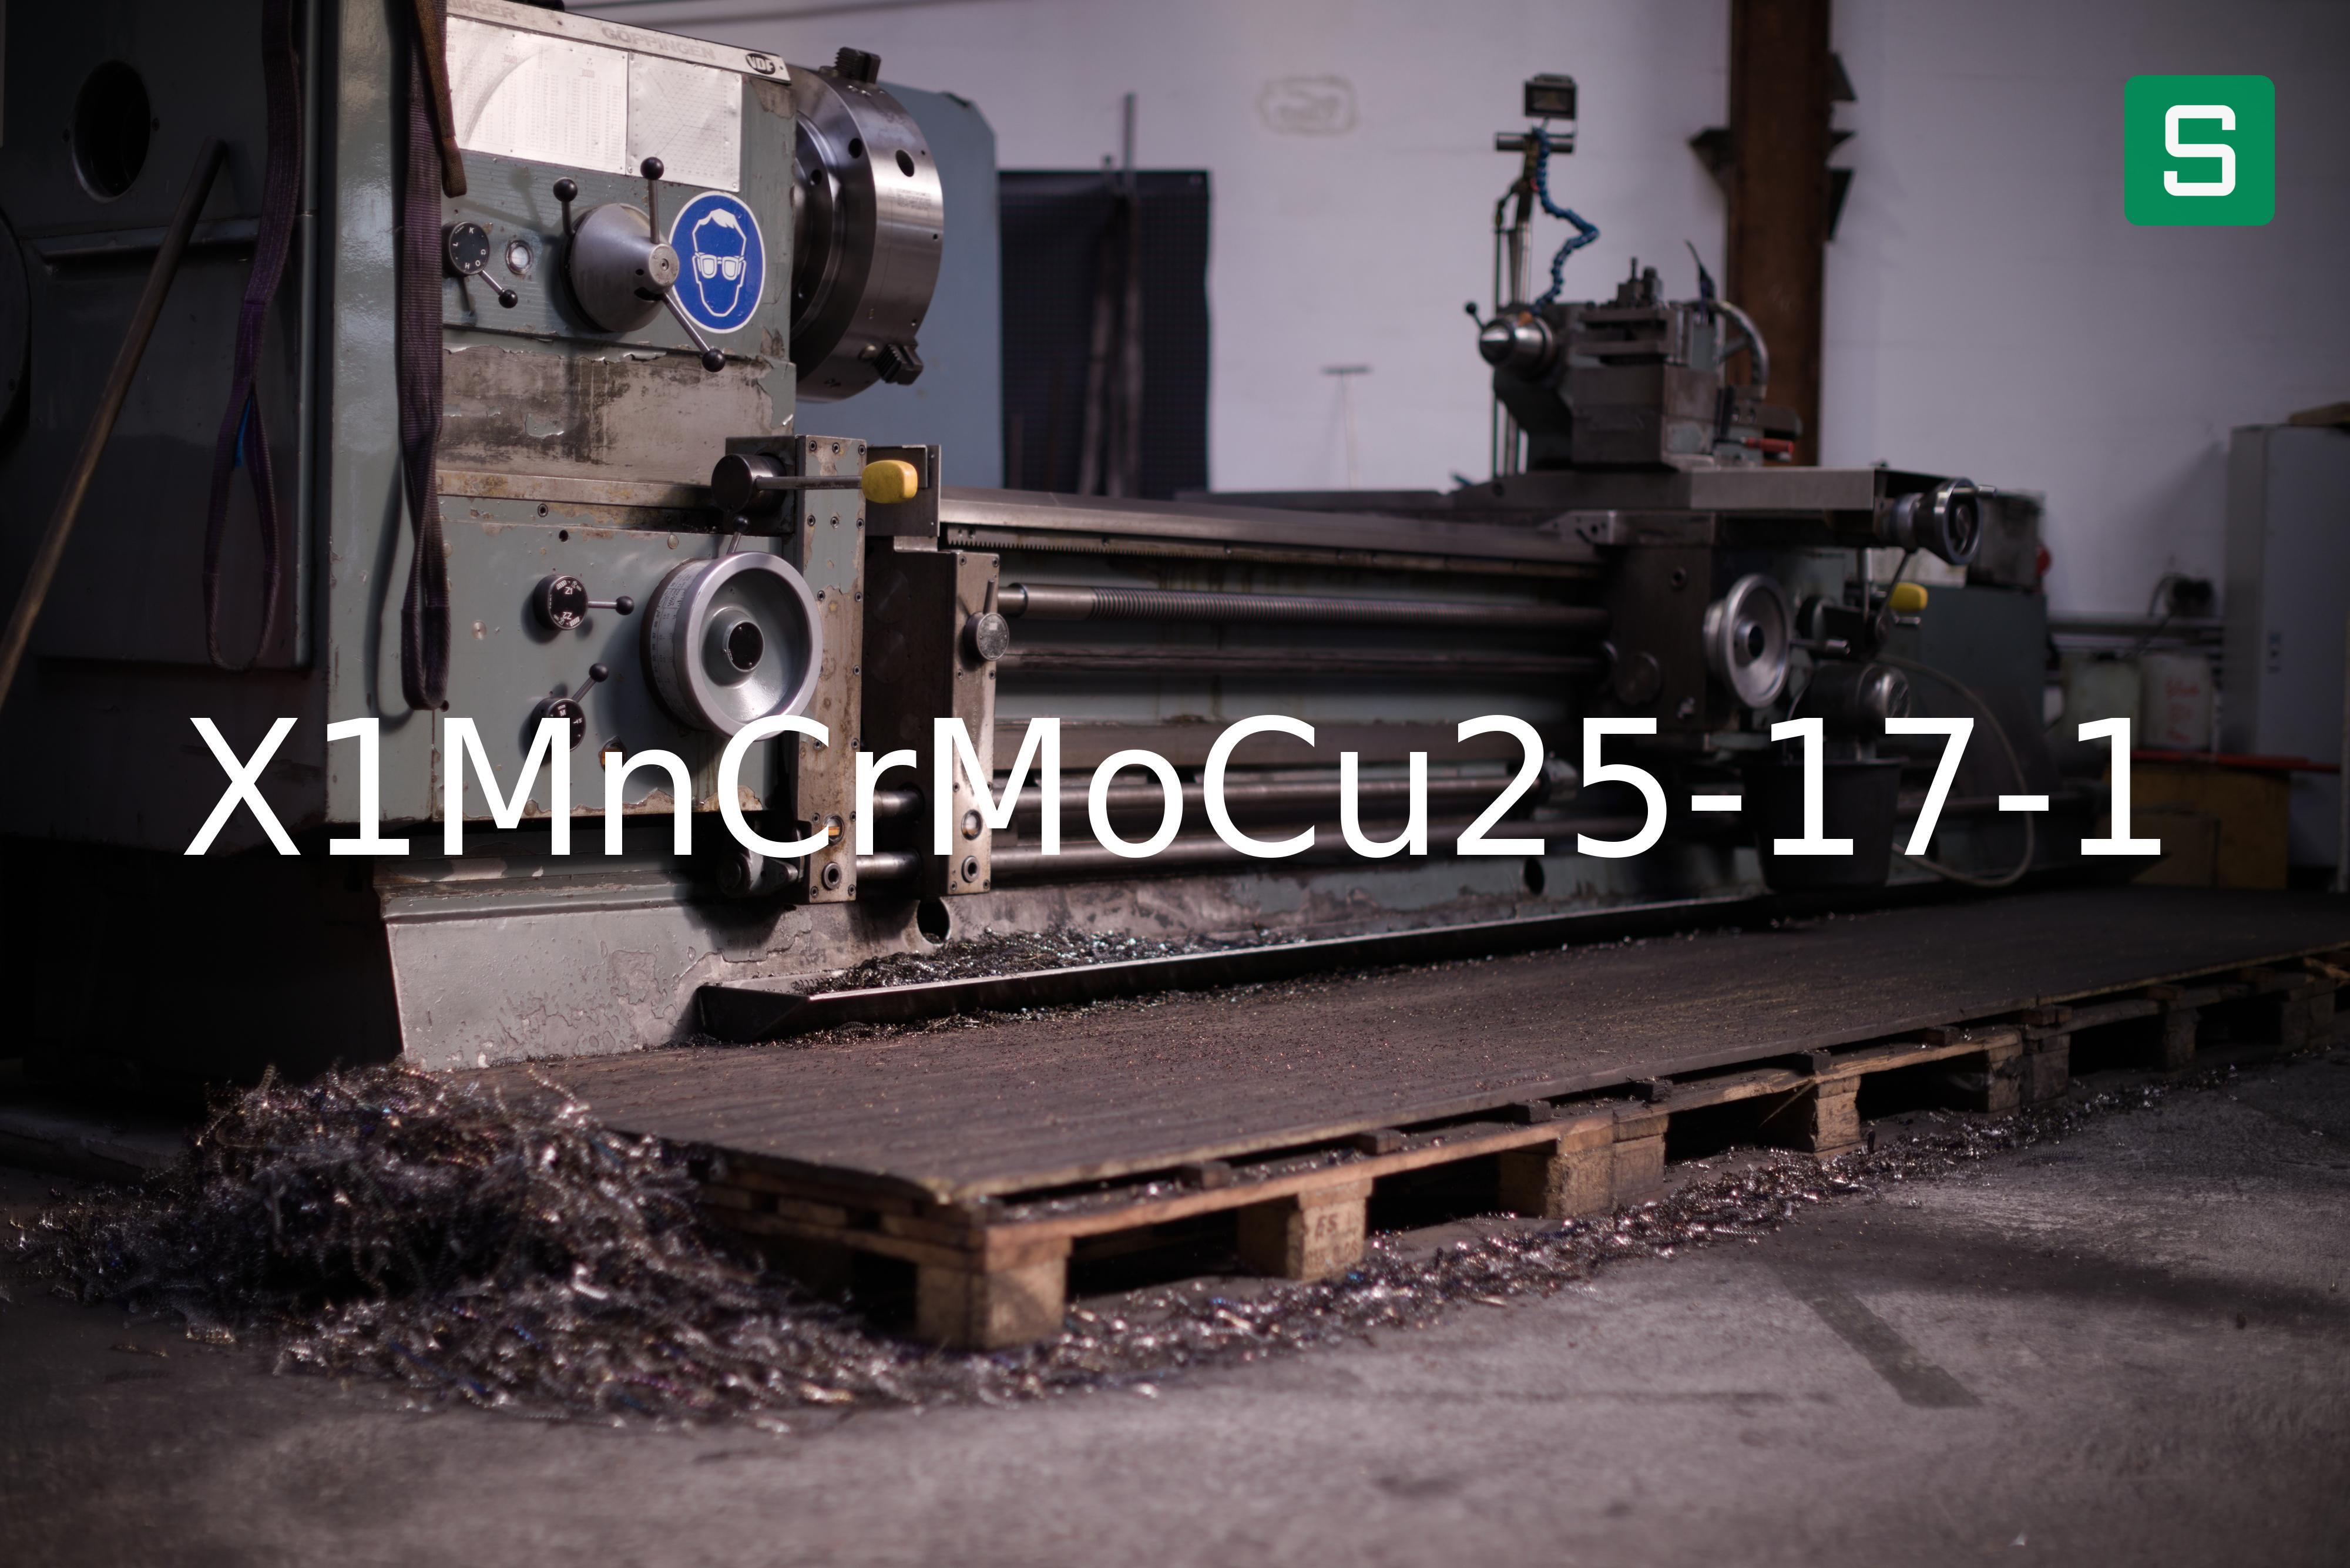 Steel Material: X1MnCrMoCu25-17-1